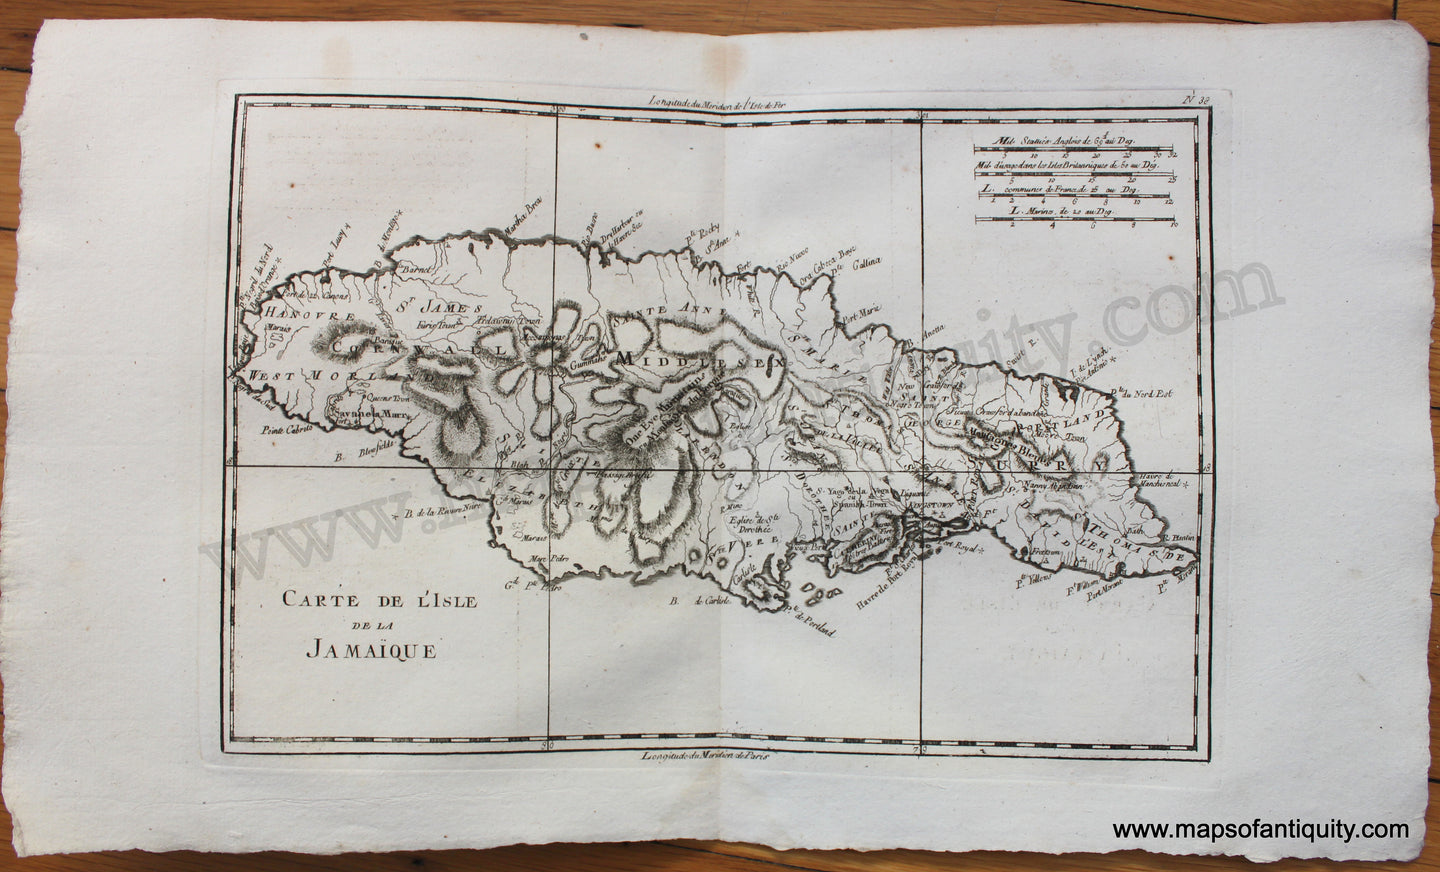 Antique-Hand-Colored-Map-Carte-de-l'Isle-de-la-Jamaique.--Central-America-and-Caribbean-West-Indies-1780-Raynal-and-Bonne-Maps-Of-Antiquity